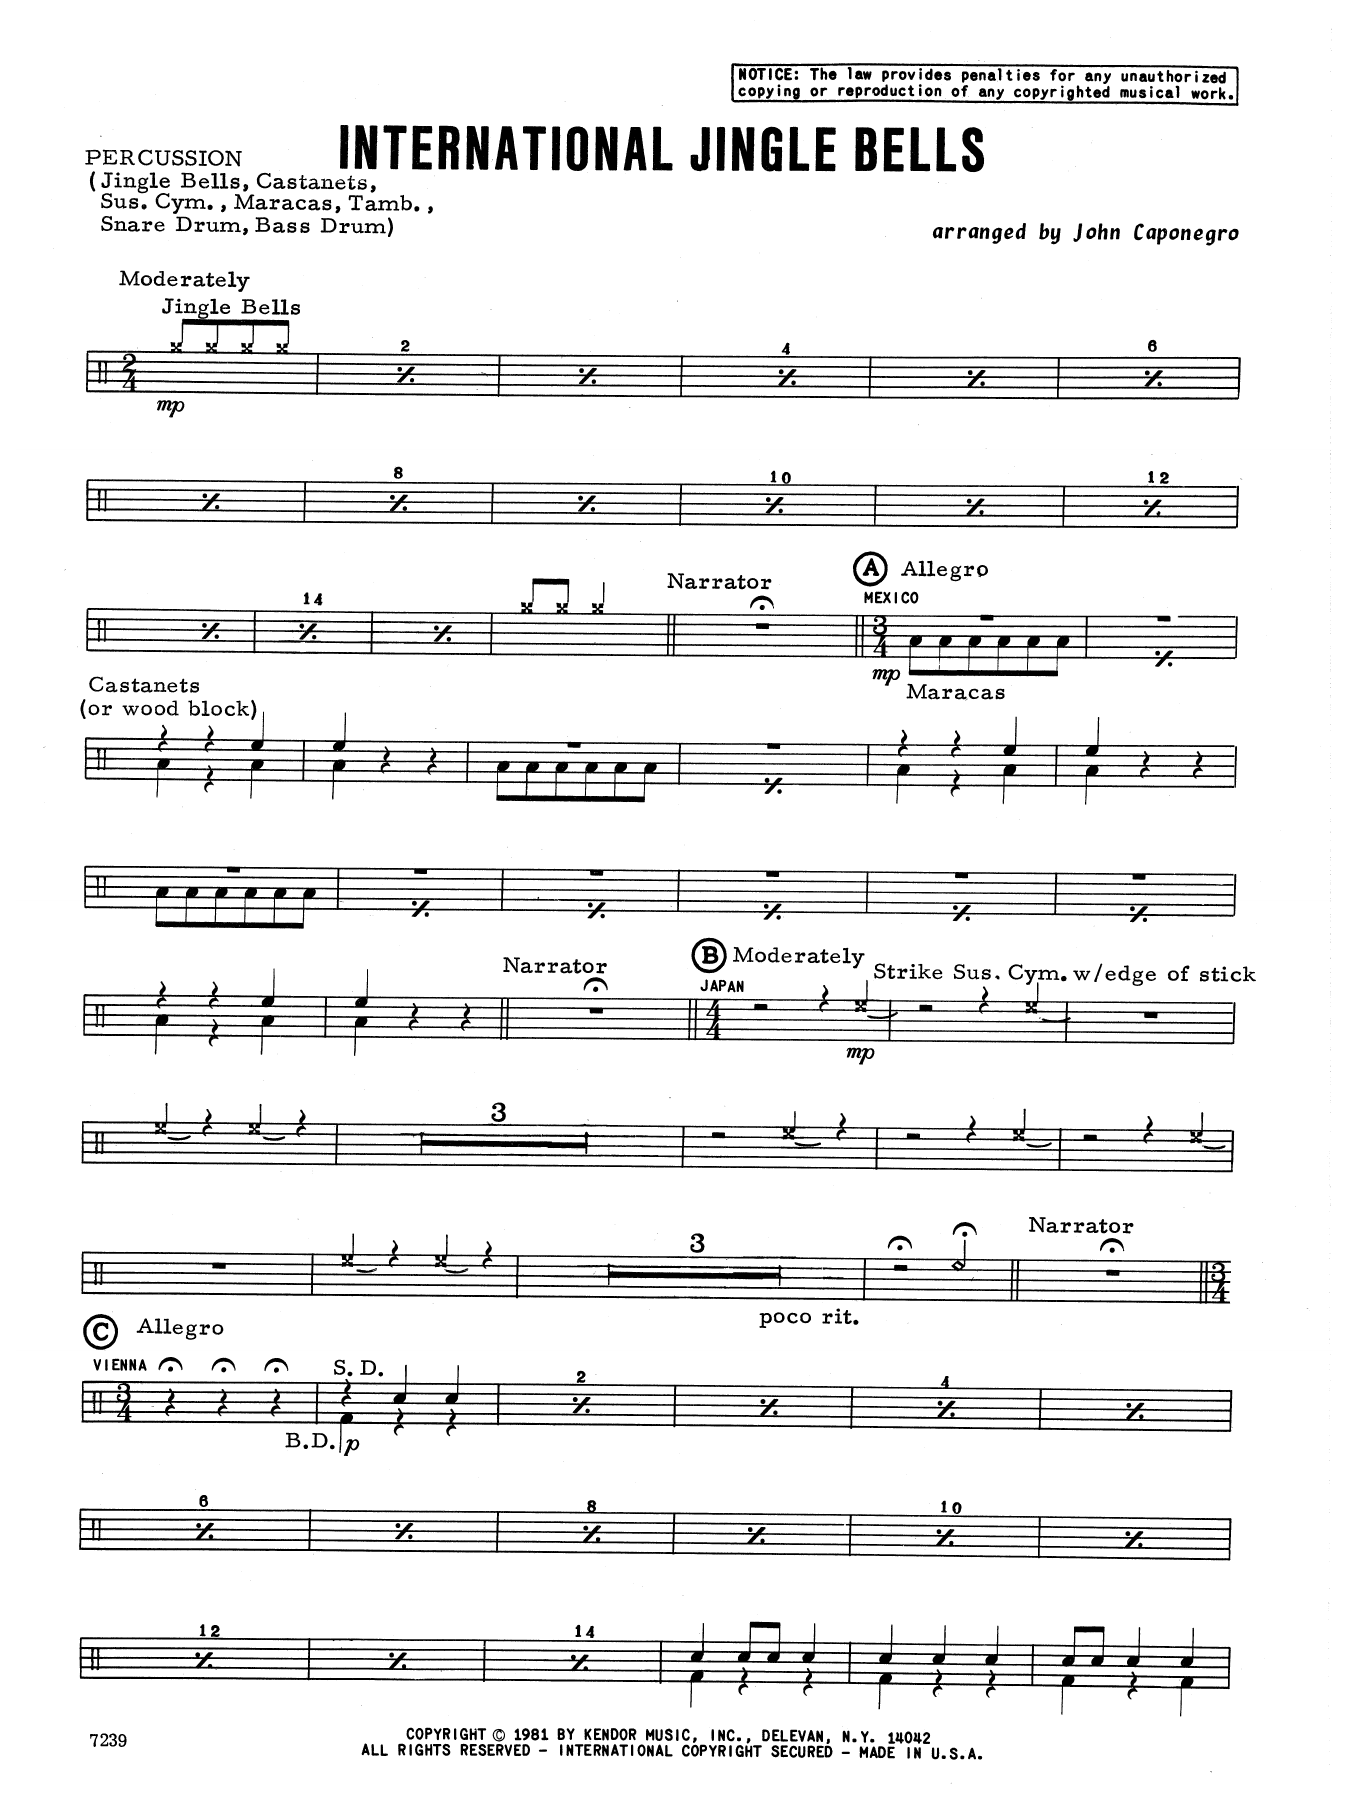 Download John Caponegro International Jingle Bells - Percussion Sheet Music